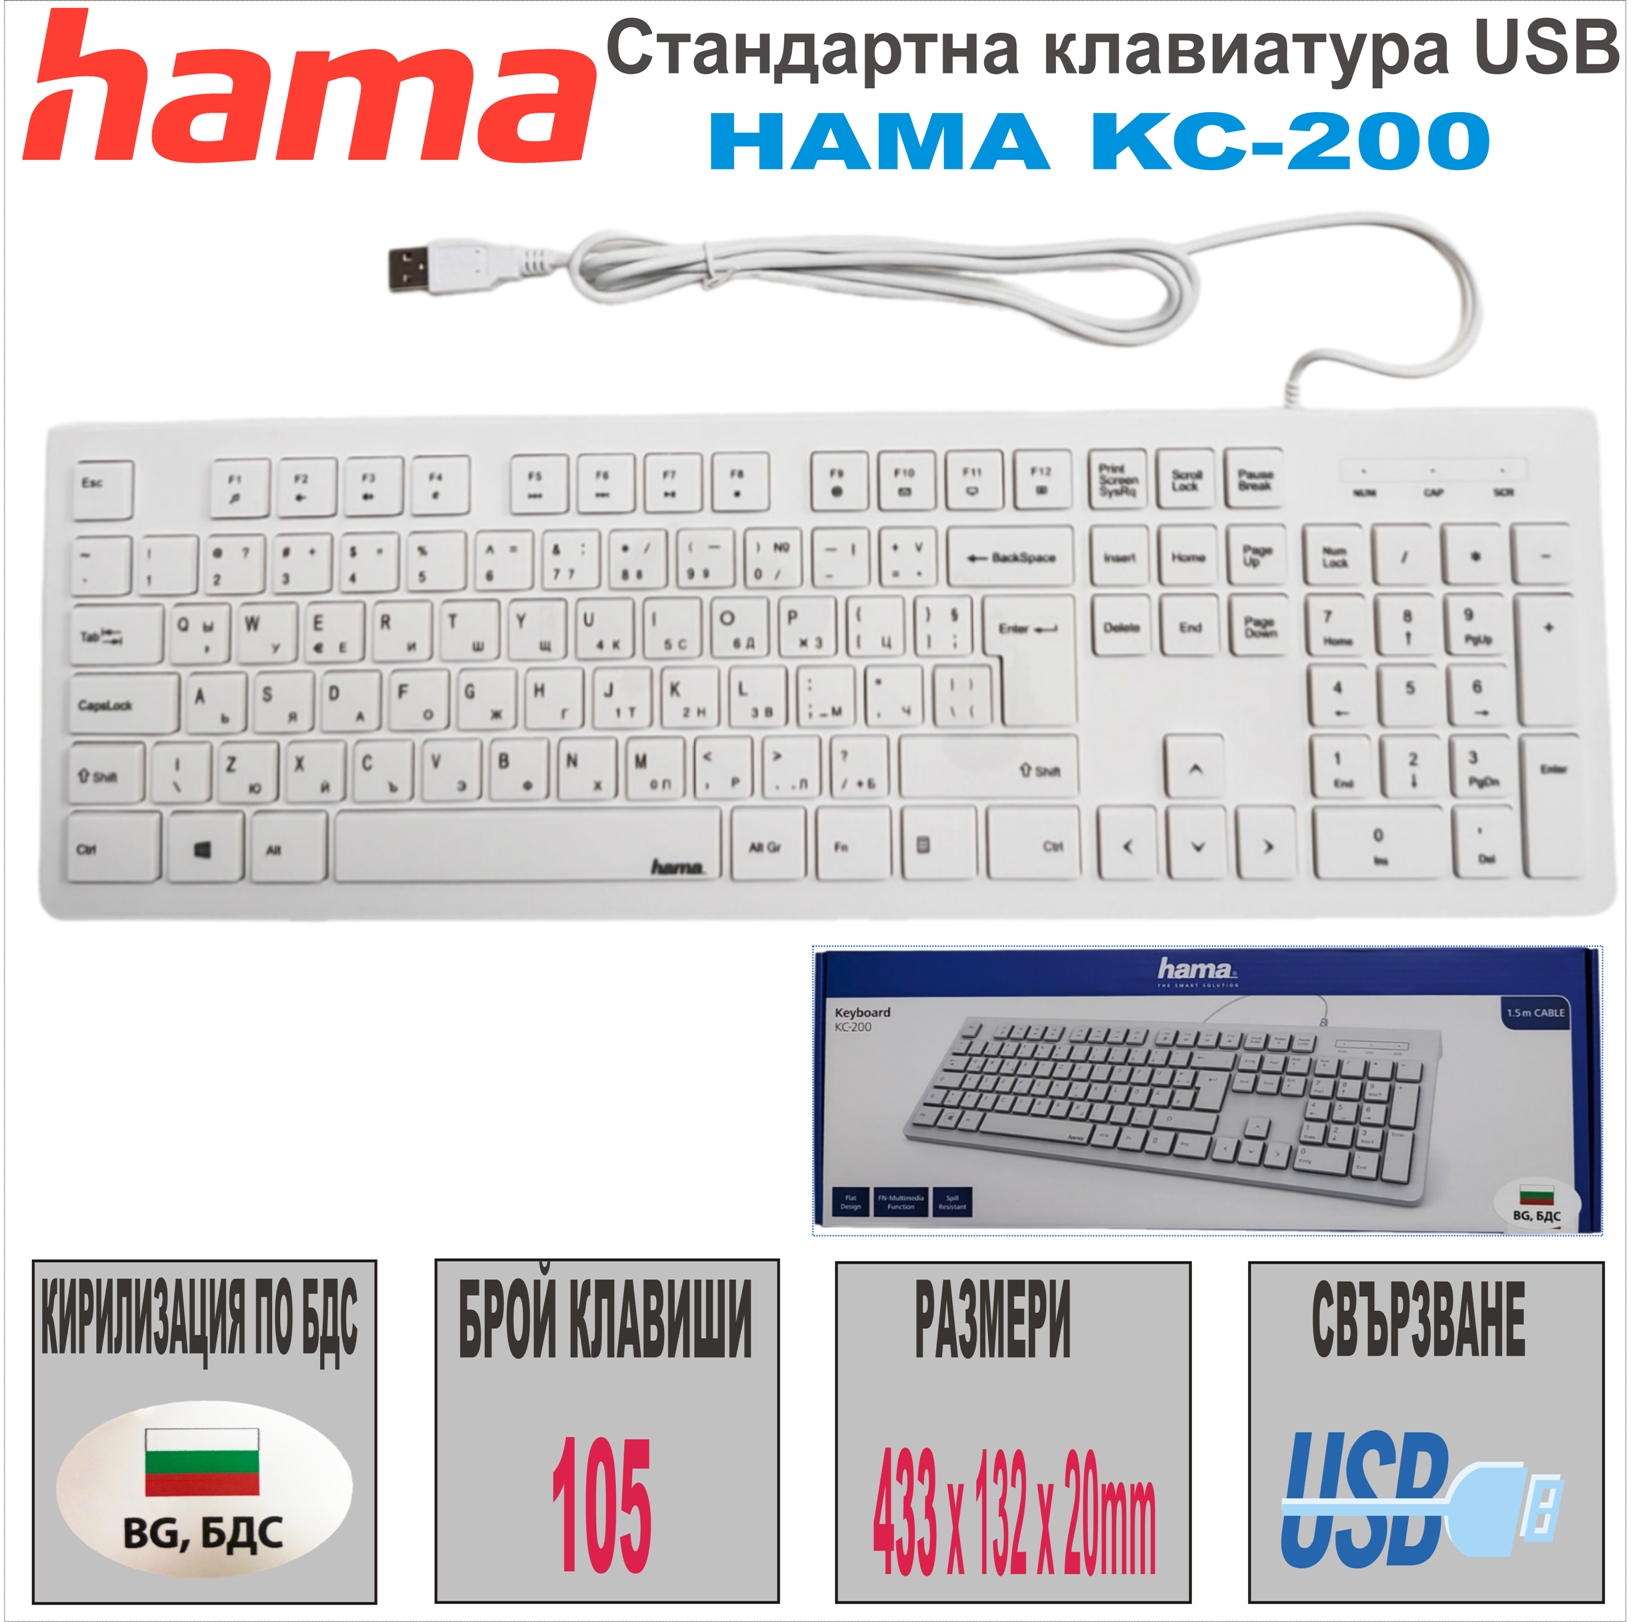 Стандартна клавиатура USB HAMA KC-200 BG/БДС